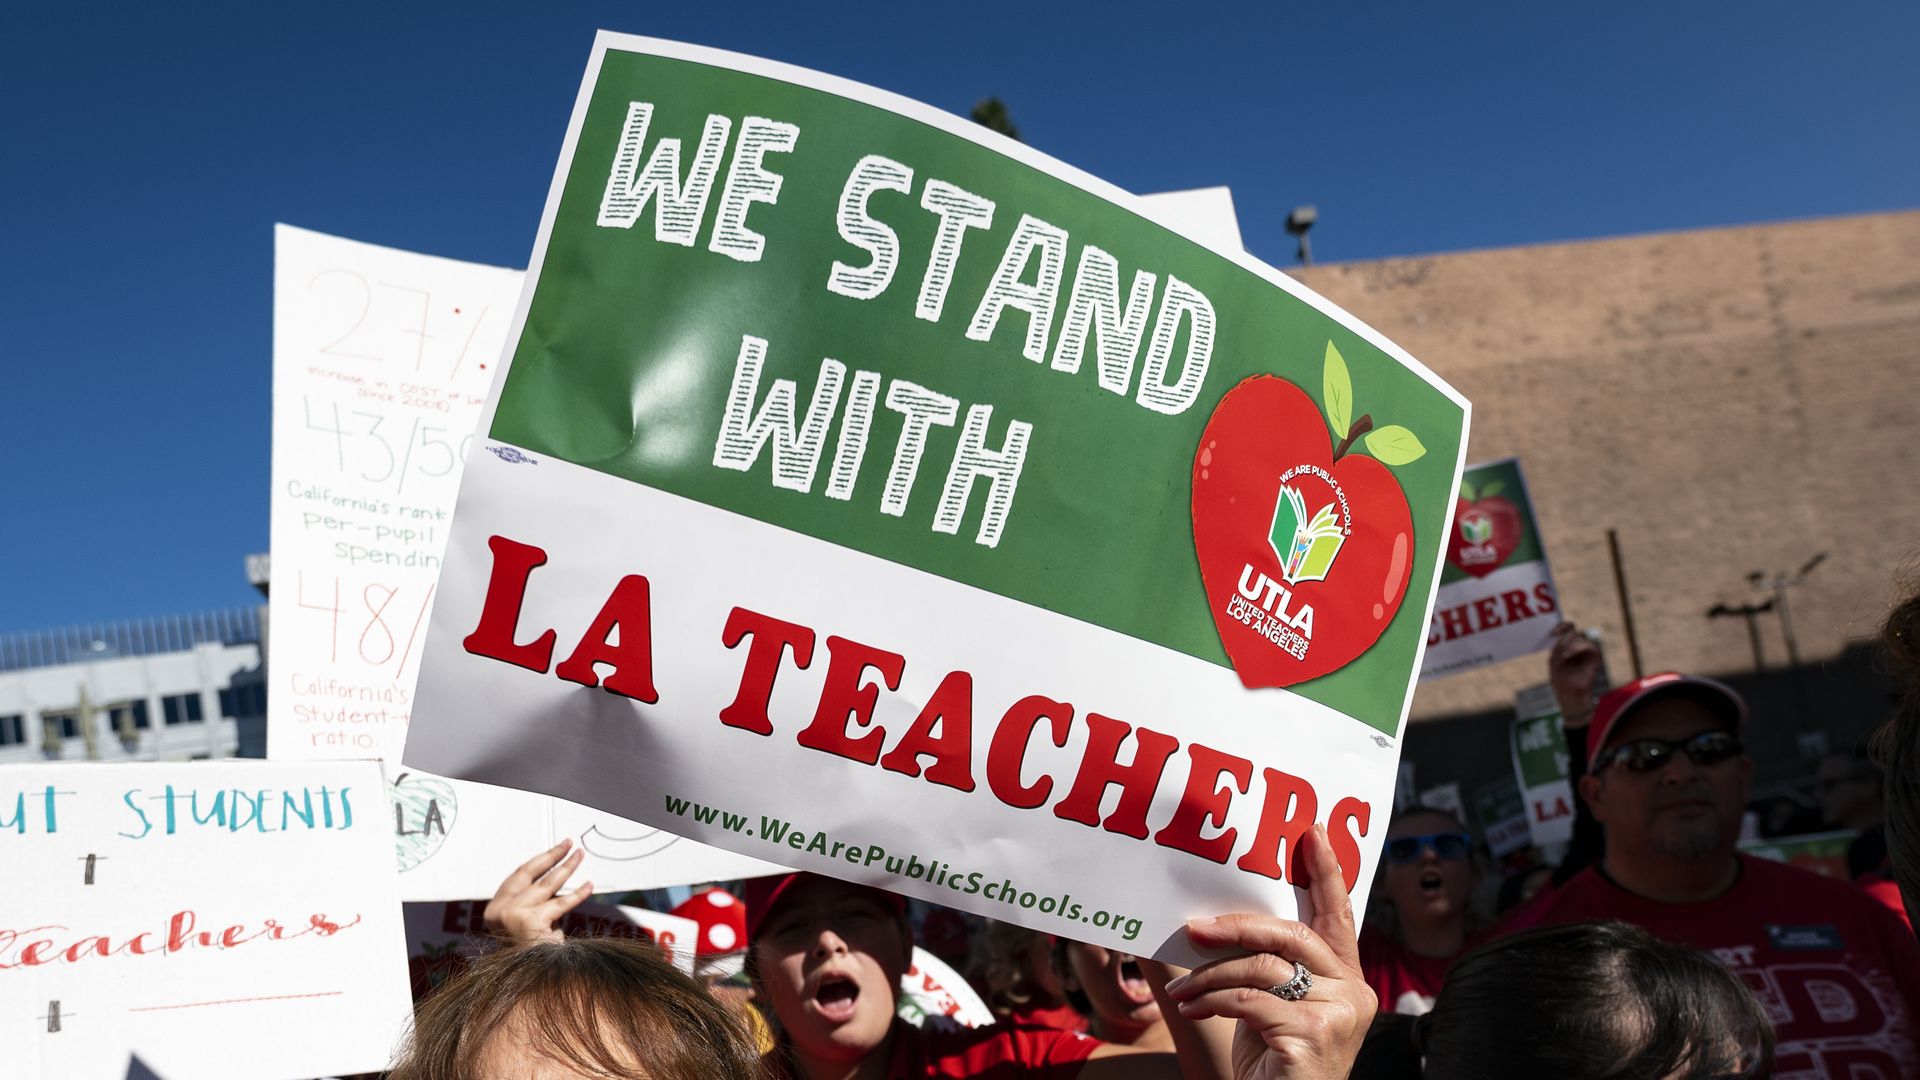 LA Teacher strike